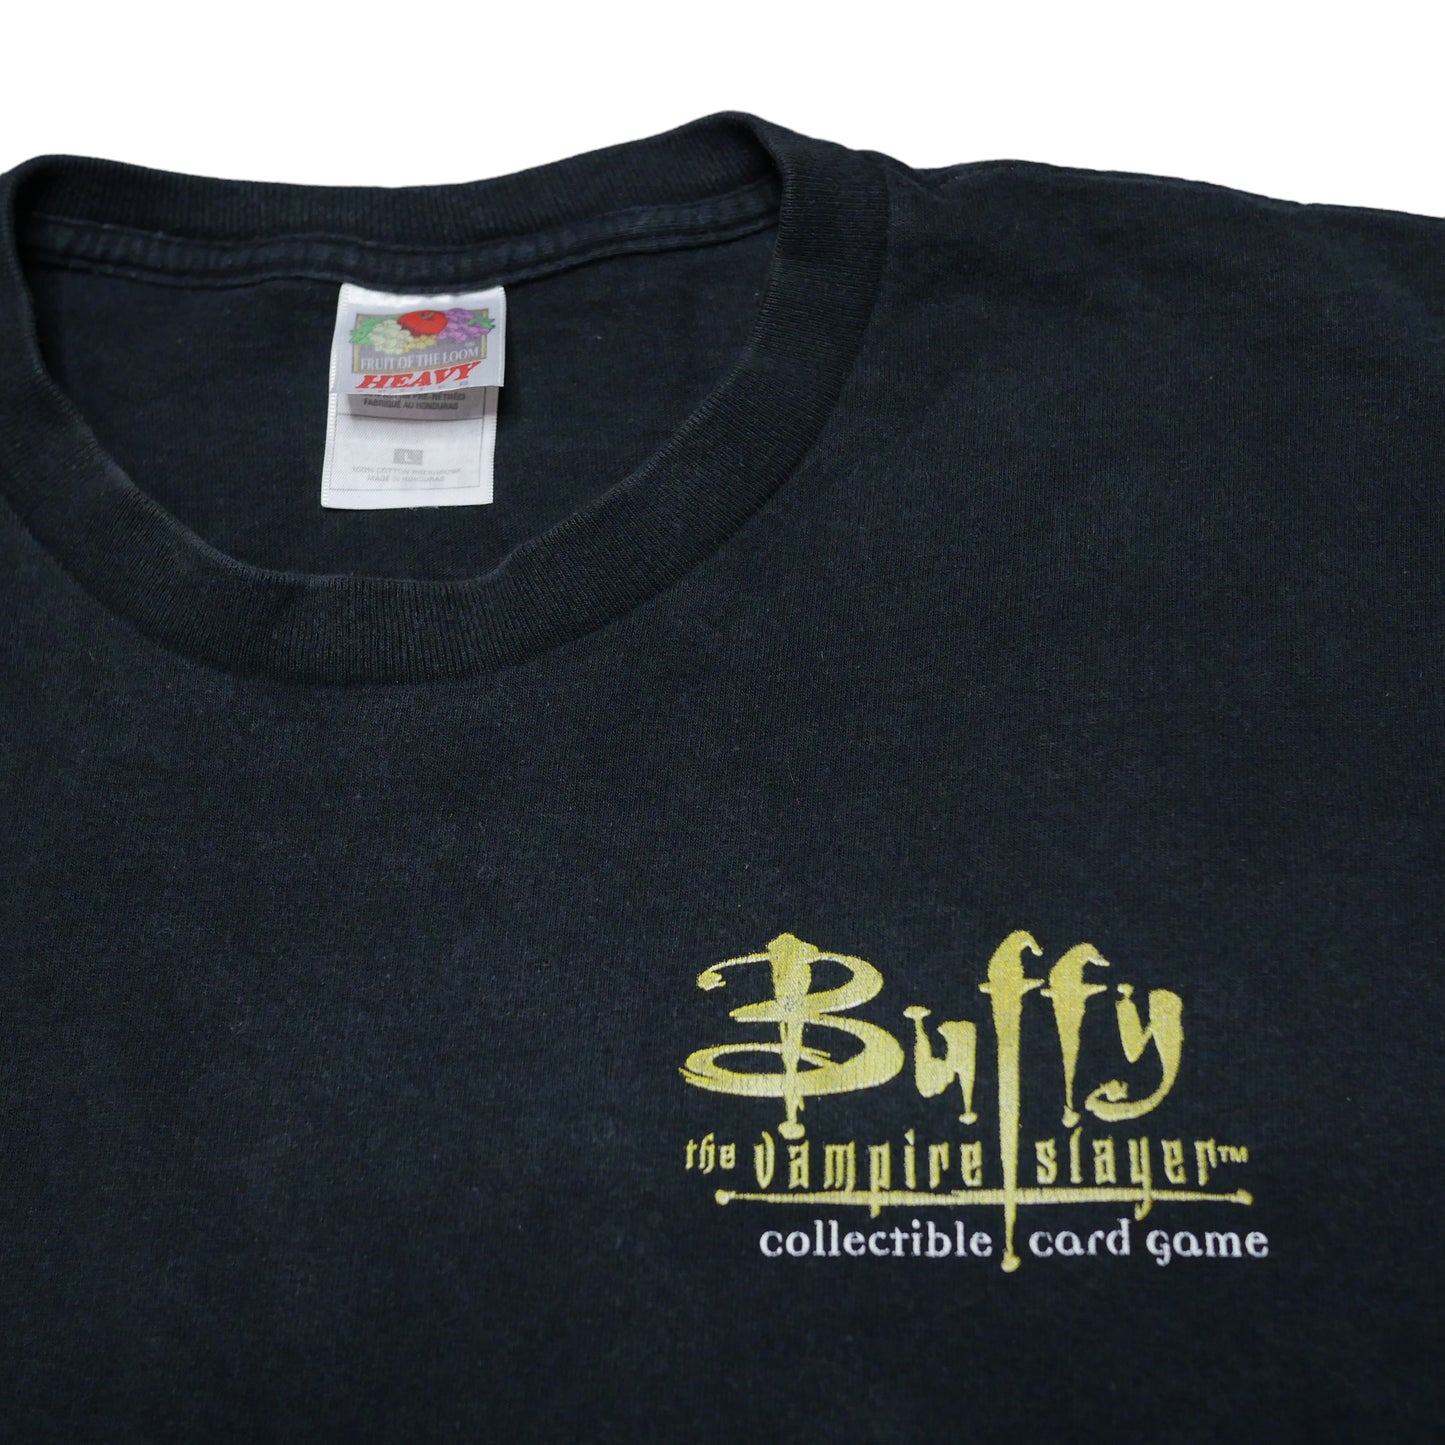 Buffy The Vampire Slayer Card Game Shirt - Large